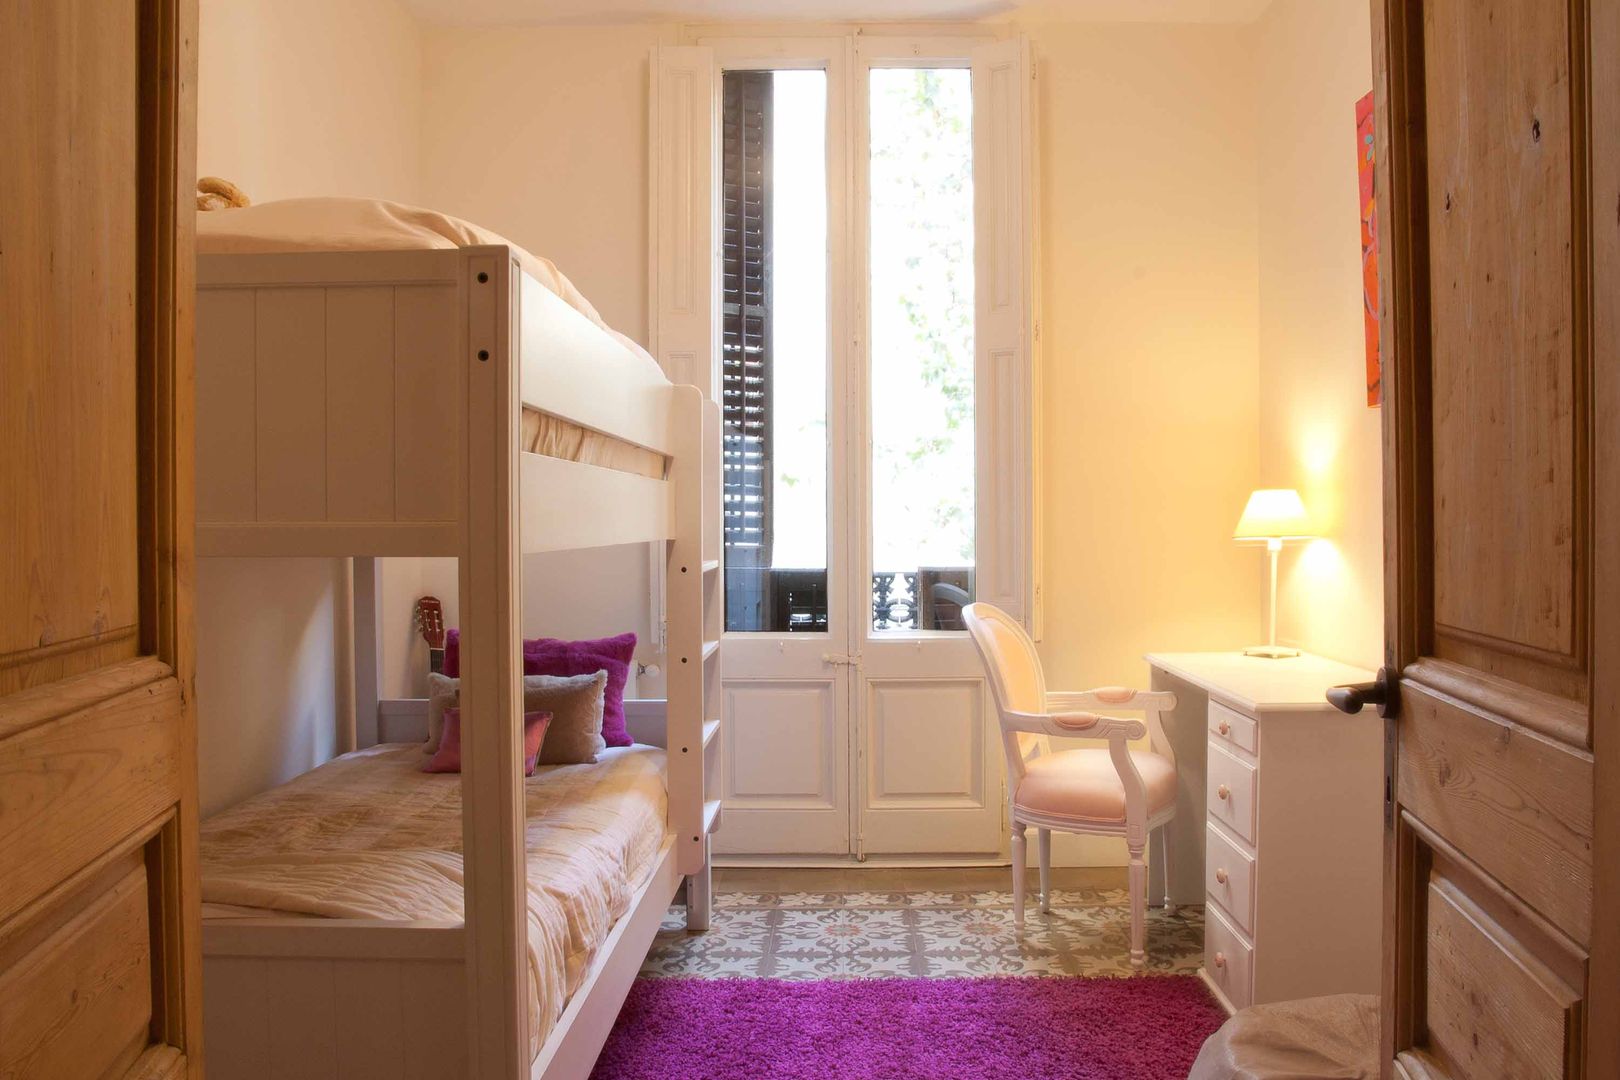 Dormitorio. Bedroom. Dormitorio infantil. Brick Serveis d'Interiorisme S.L. Dormitorios modernos